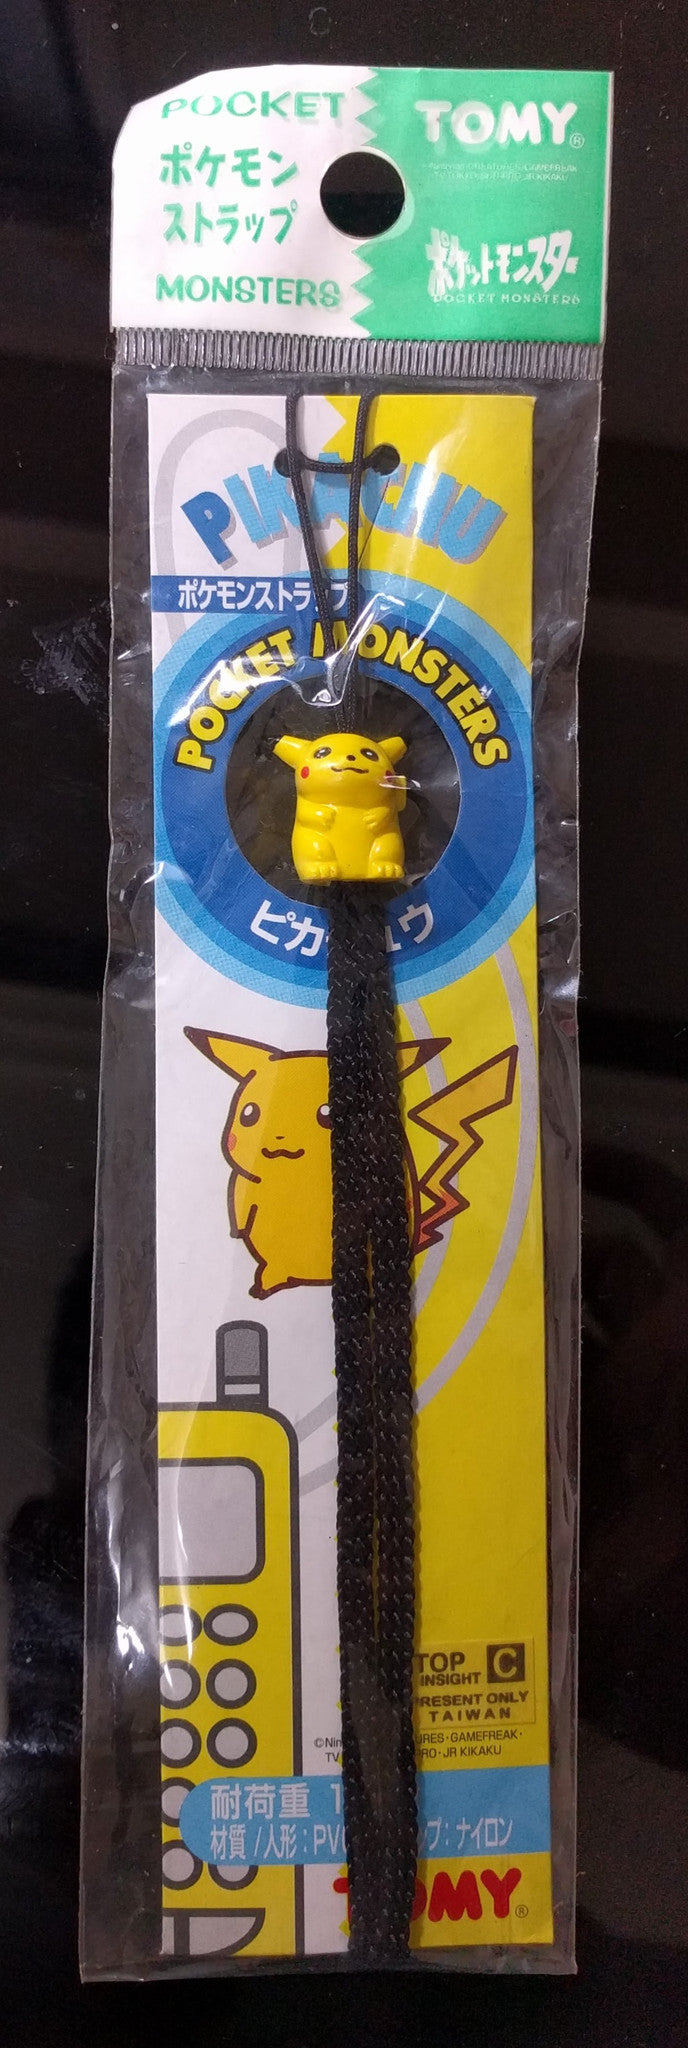 Tomy Vintage Nintendo Pokemon Pocket Monster Taiwan Only Pikachu Mascot Phone Strap Figure